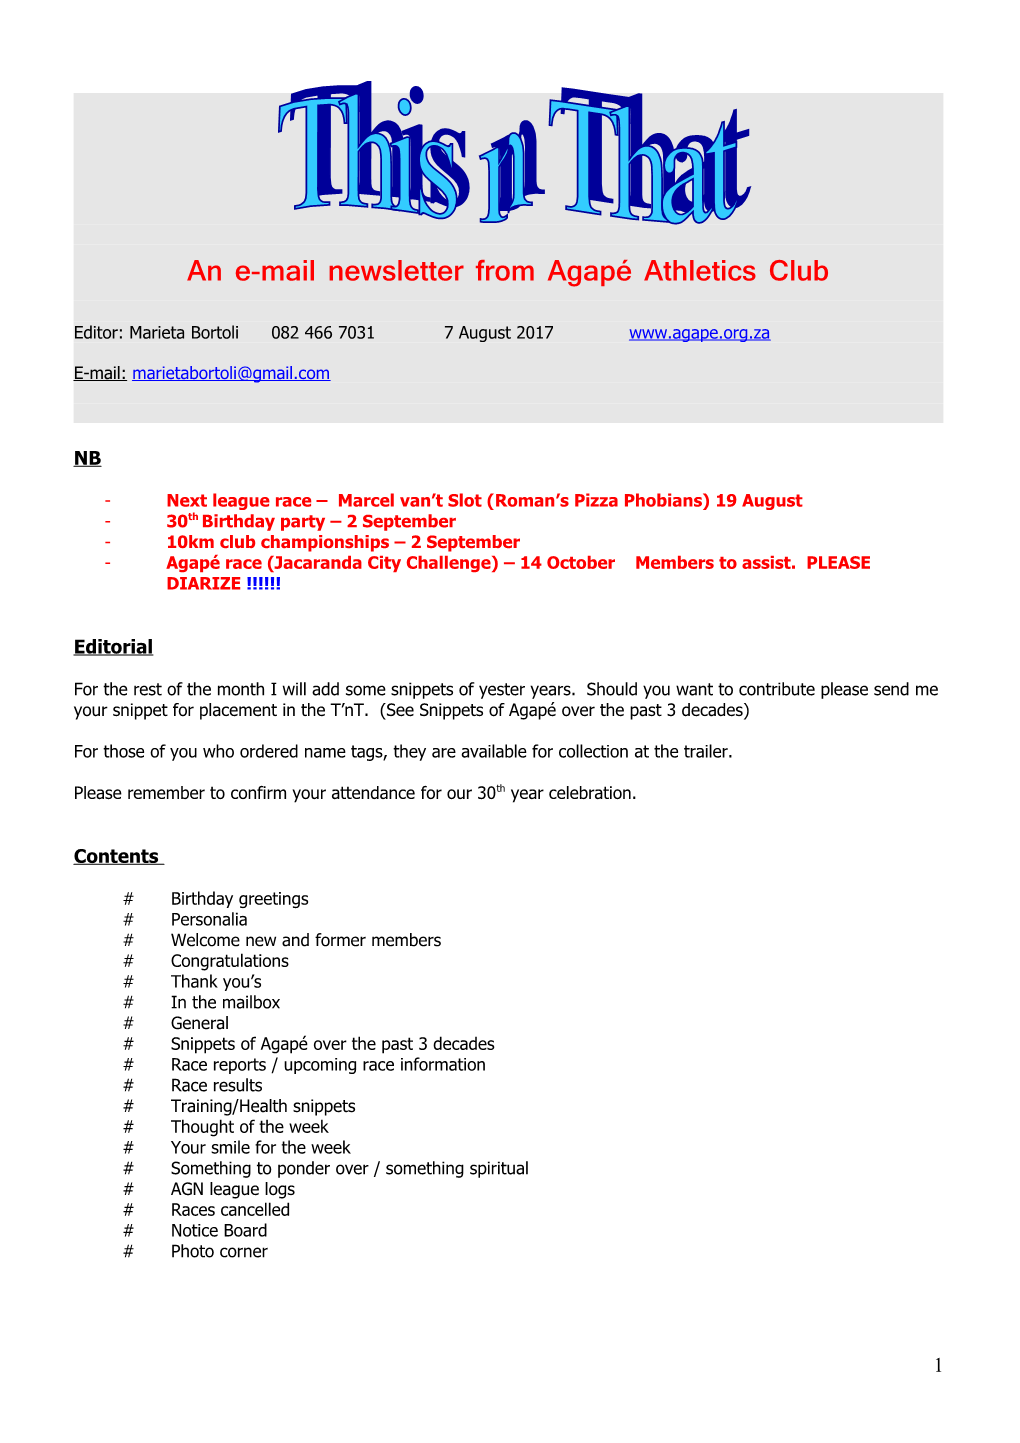 An E-Mail Newsletter from Agapé Athletics Club s1